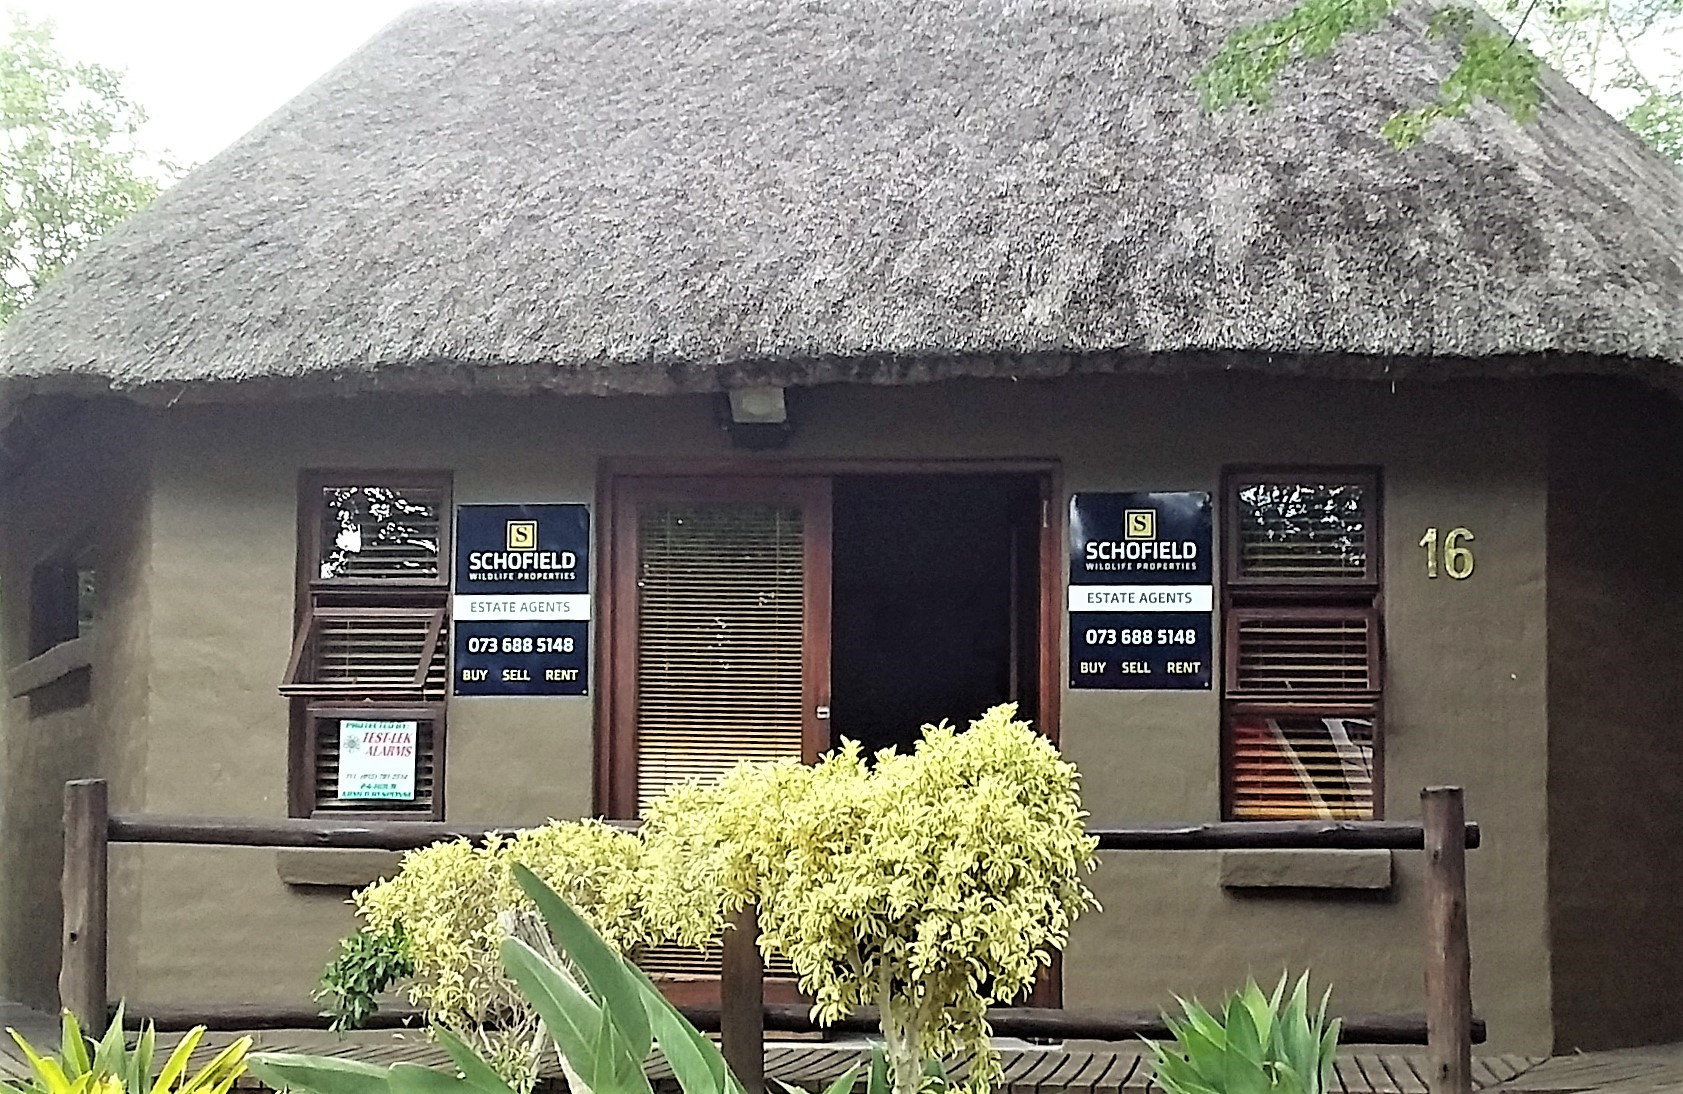 Schofield Wildlife Properties Office in Hoedspruit South Africa - WELCOME!